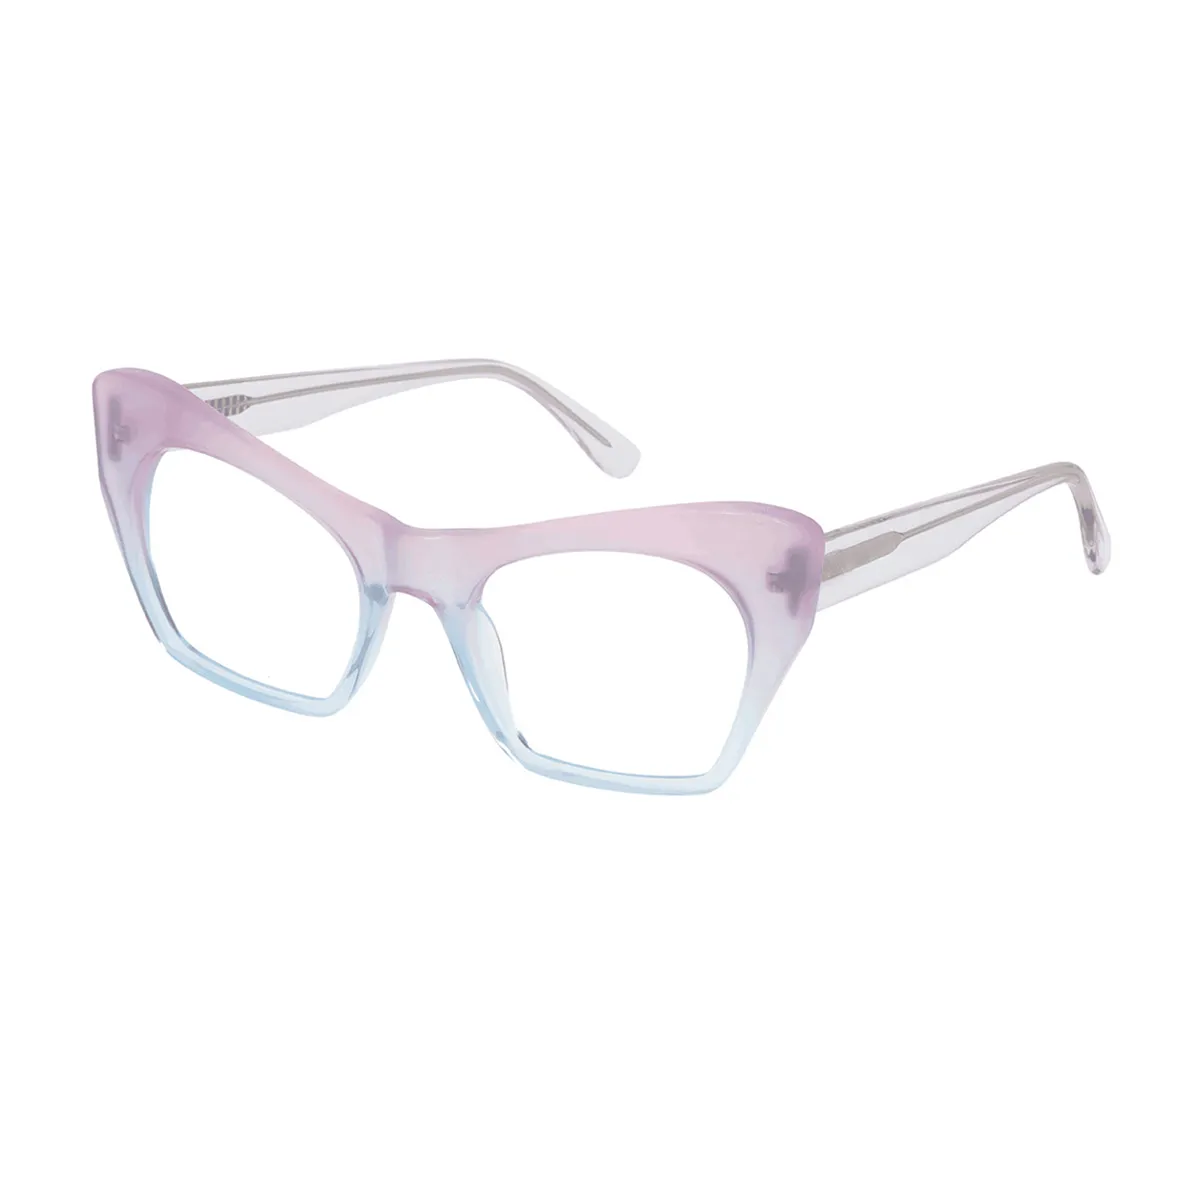 Jocelyn - Cat-eye Pink Glasses for Women - EFE